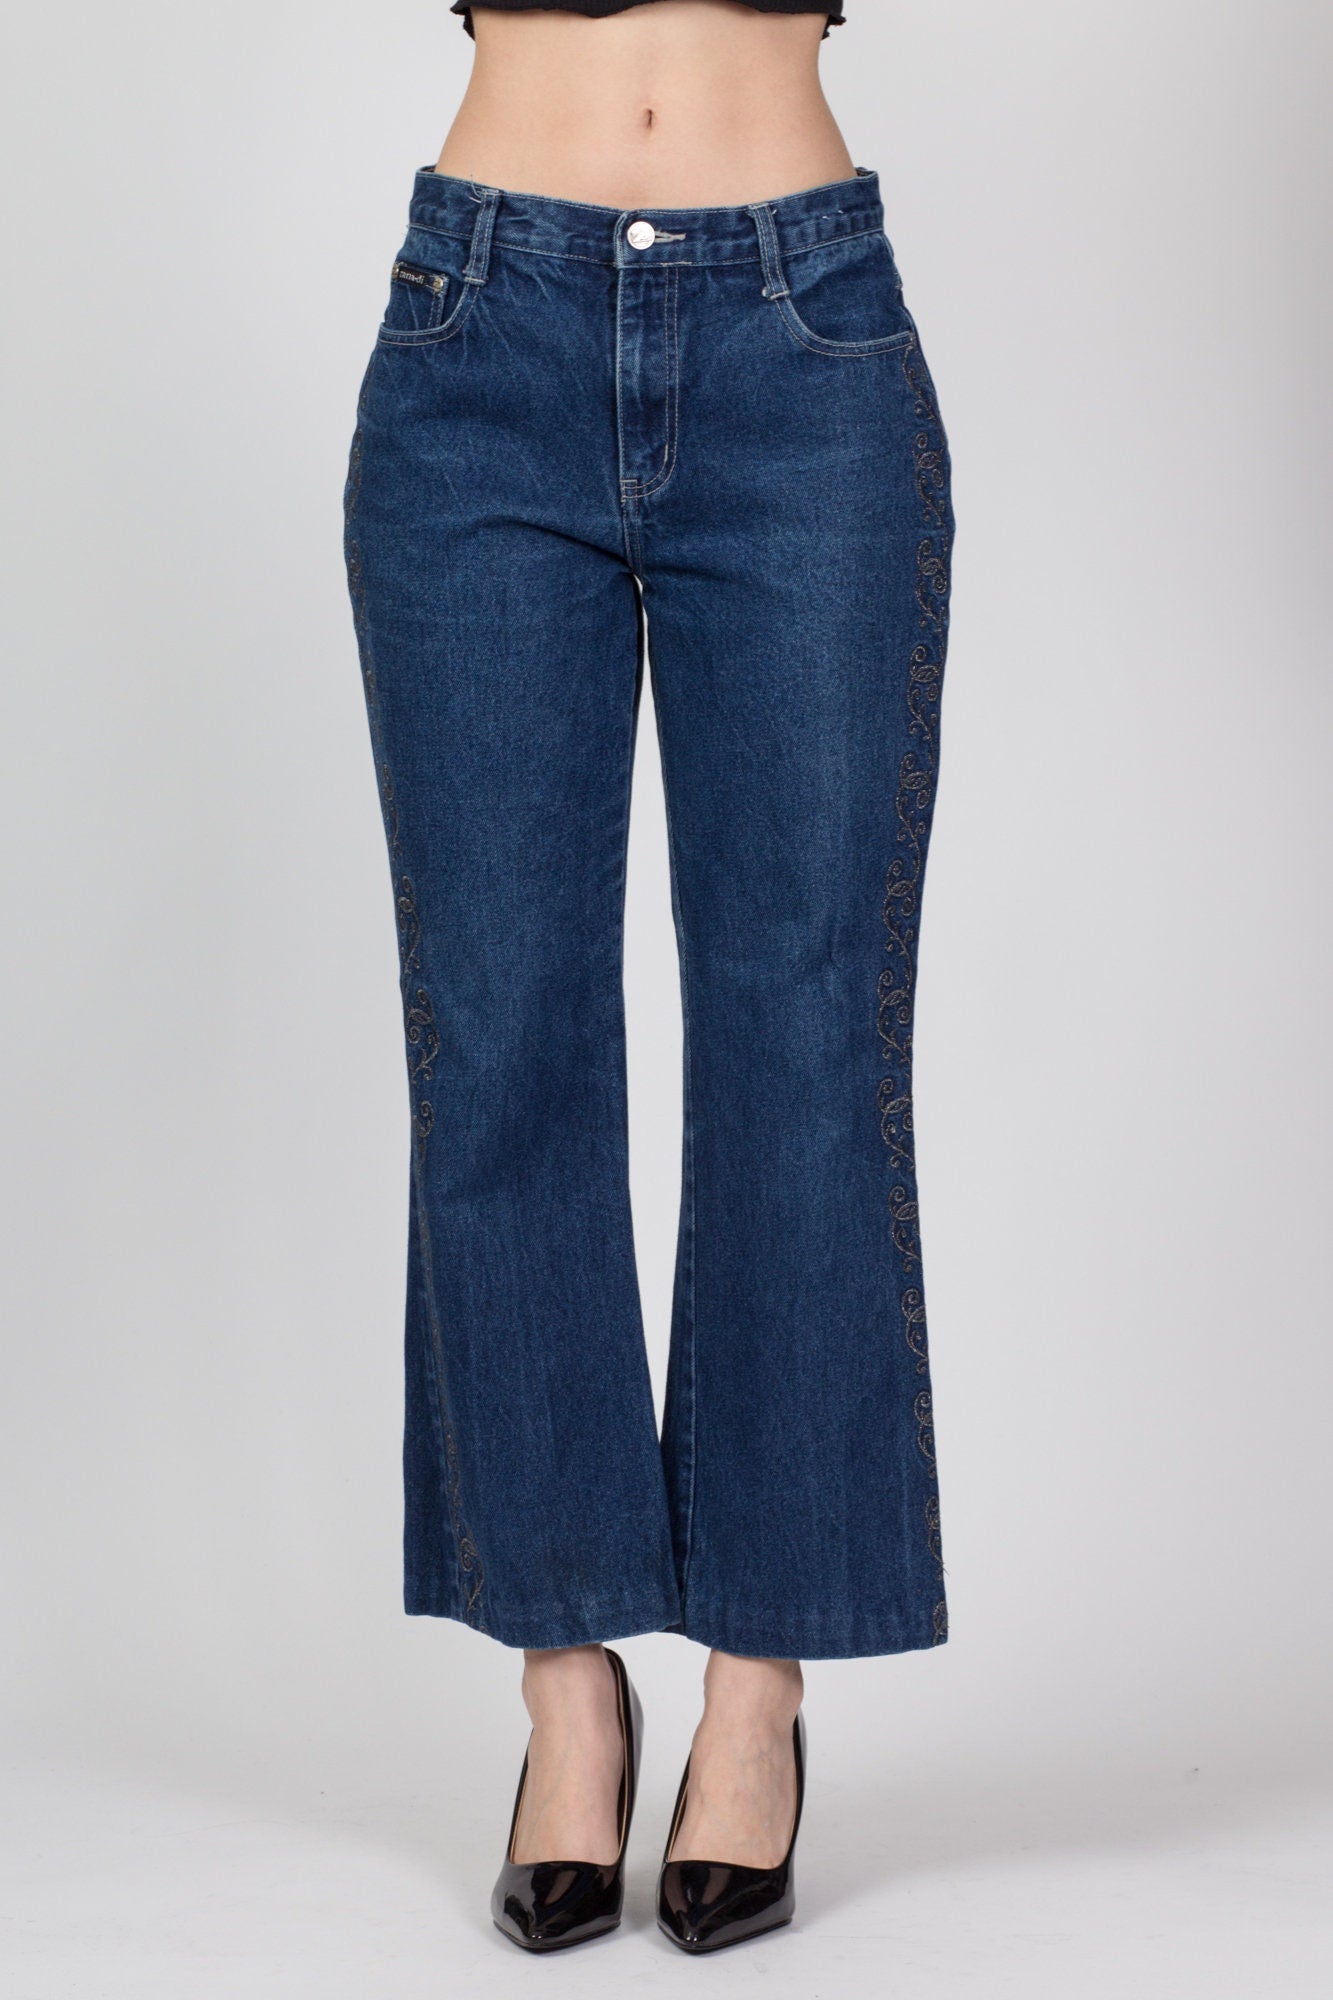 90s Embellished Kick Flare Jeans - Medium, 31" 